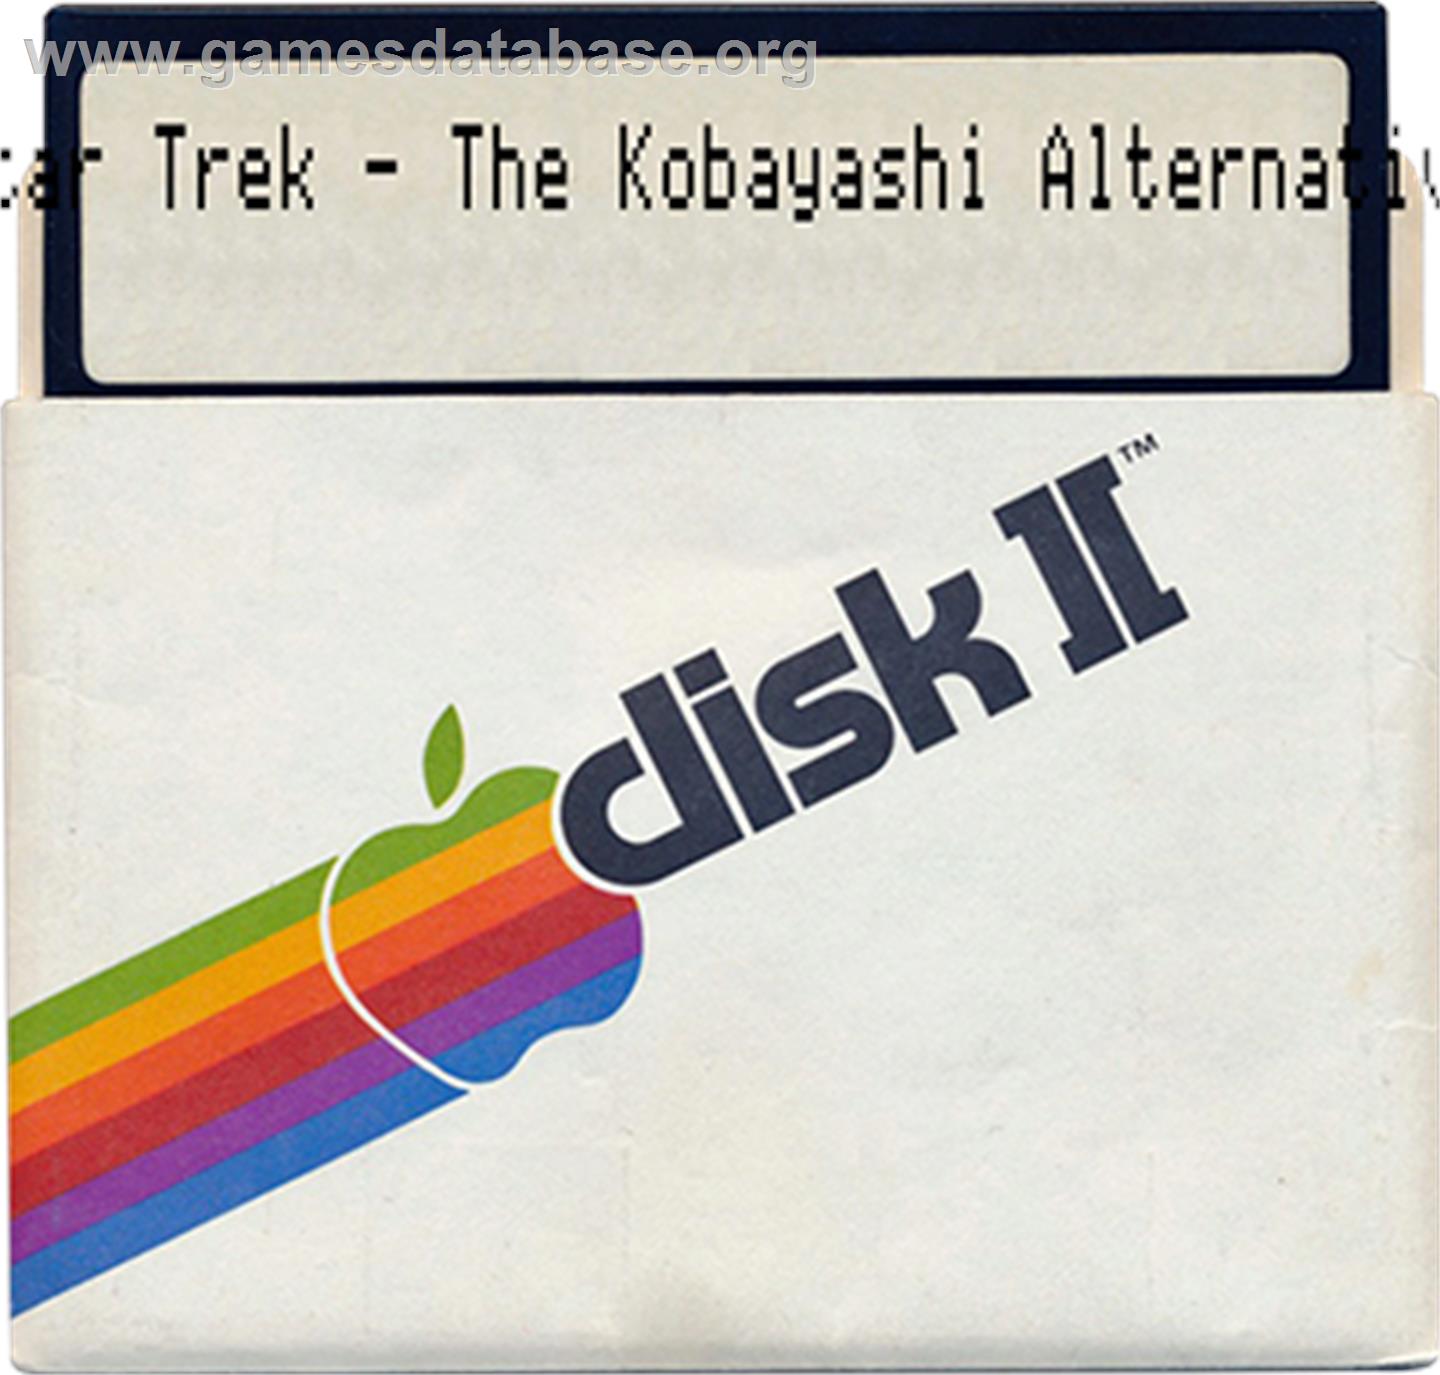 Star Trek The Kobayashi Alternative - Apple II - Artwork - Disc